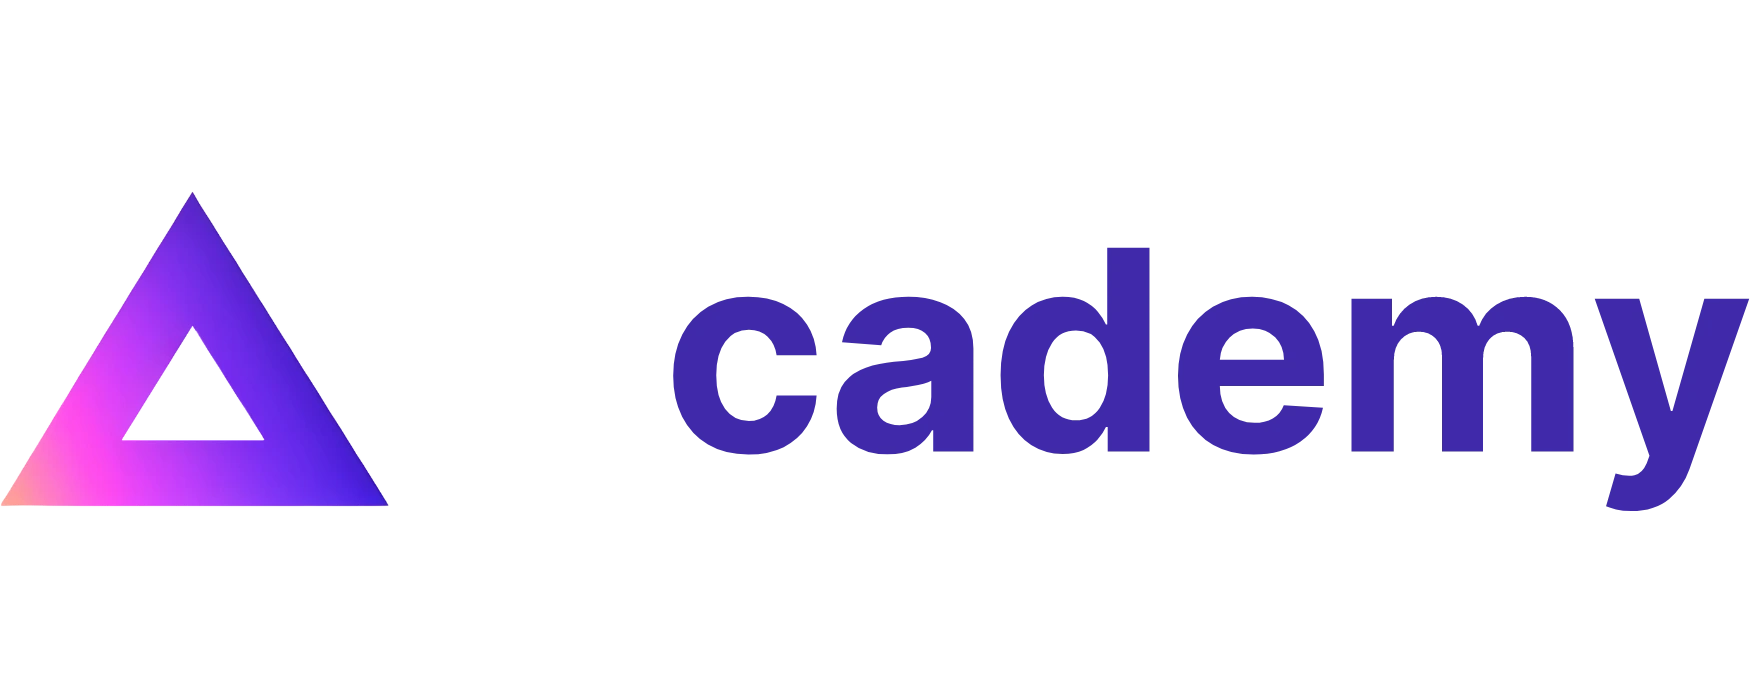 aicademy logo purple background